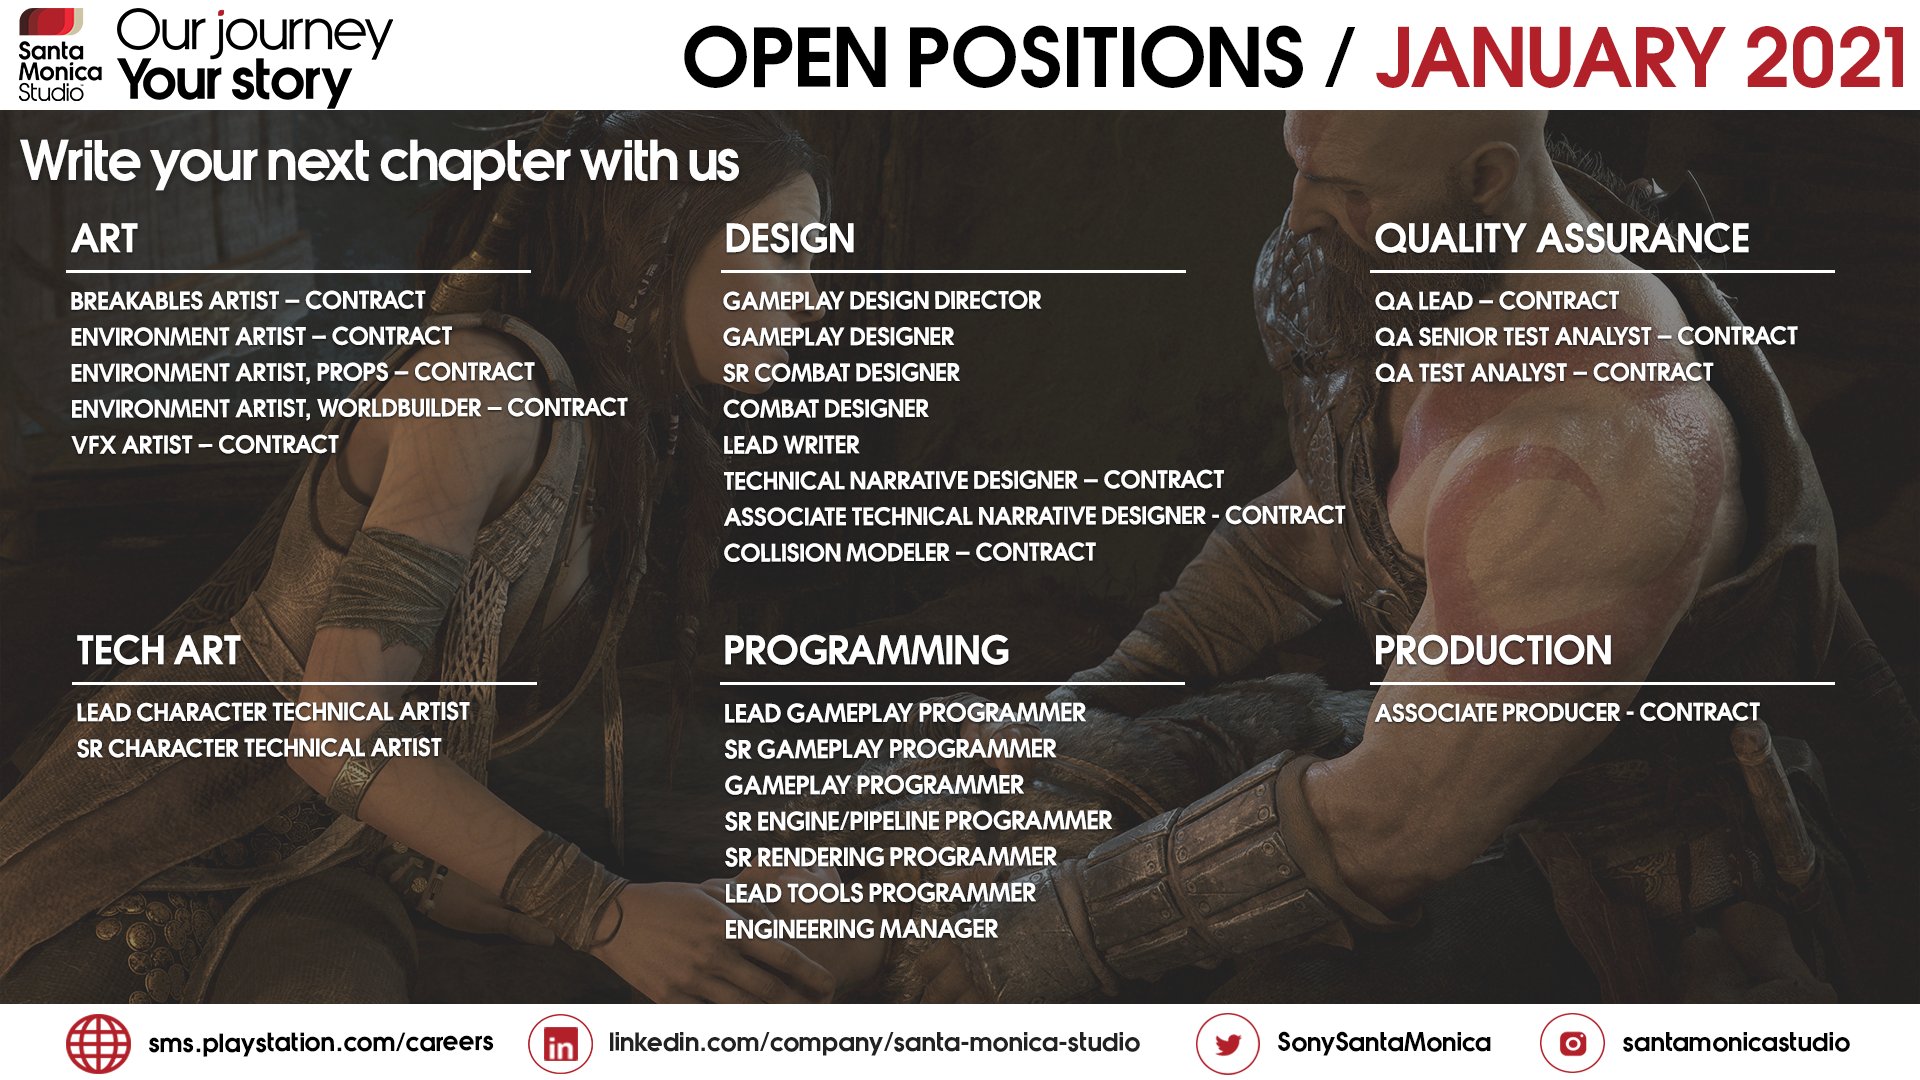 Santa Monica Studio open positions for January 2021.